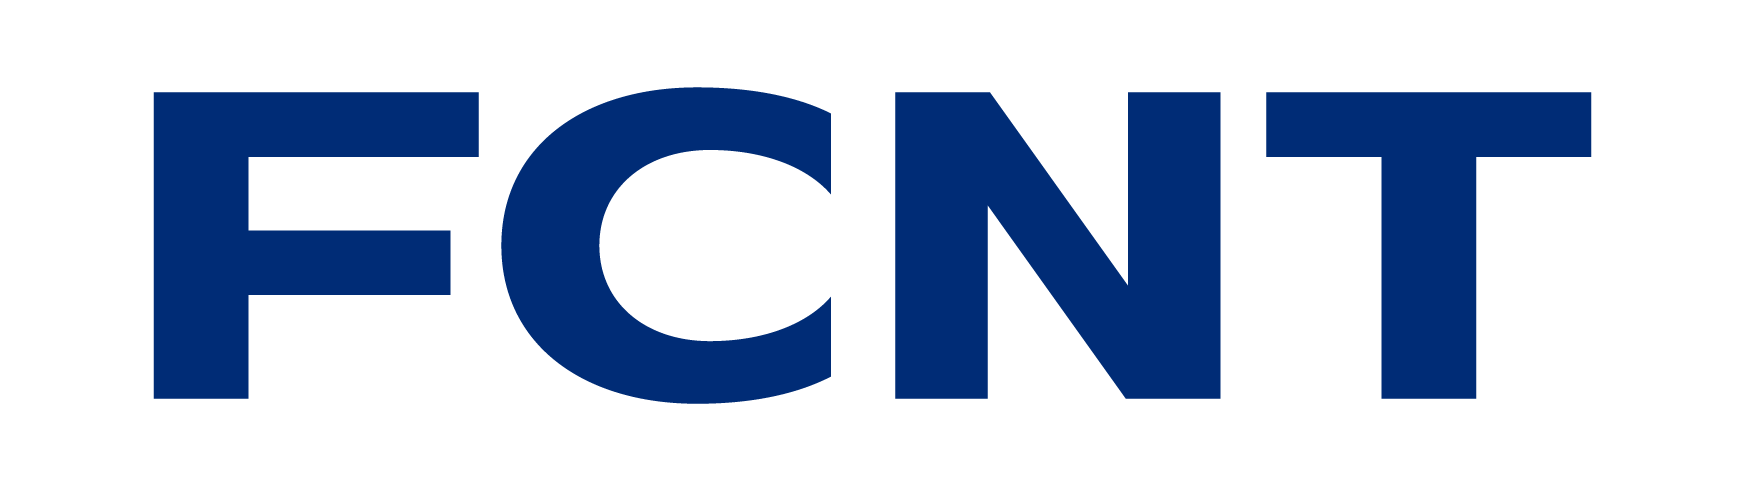 FCNT株式会社